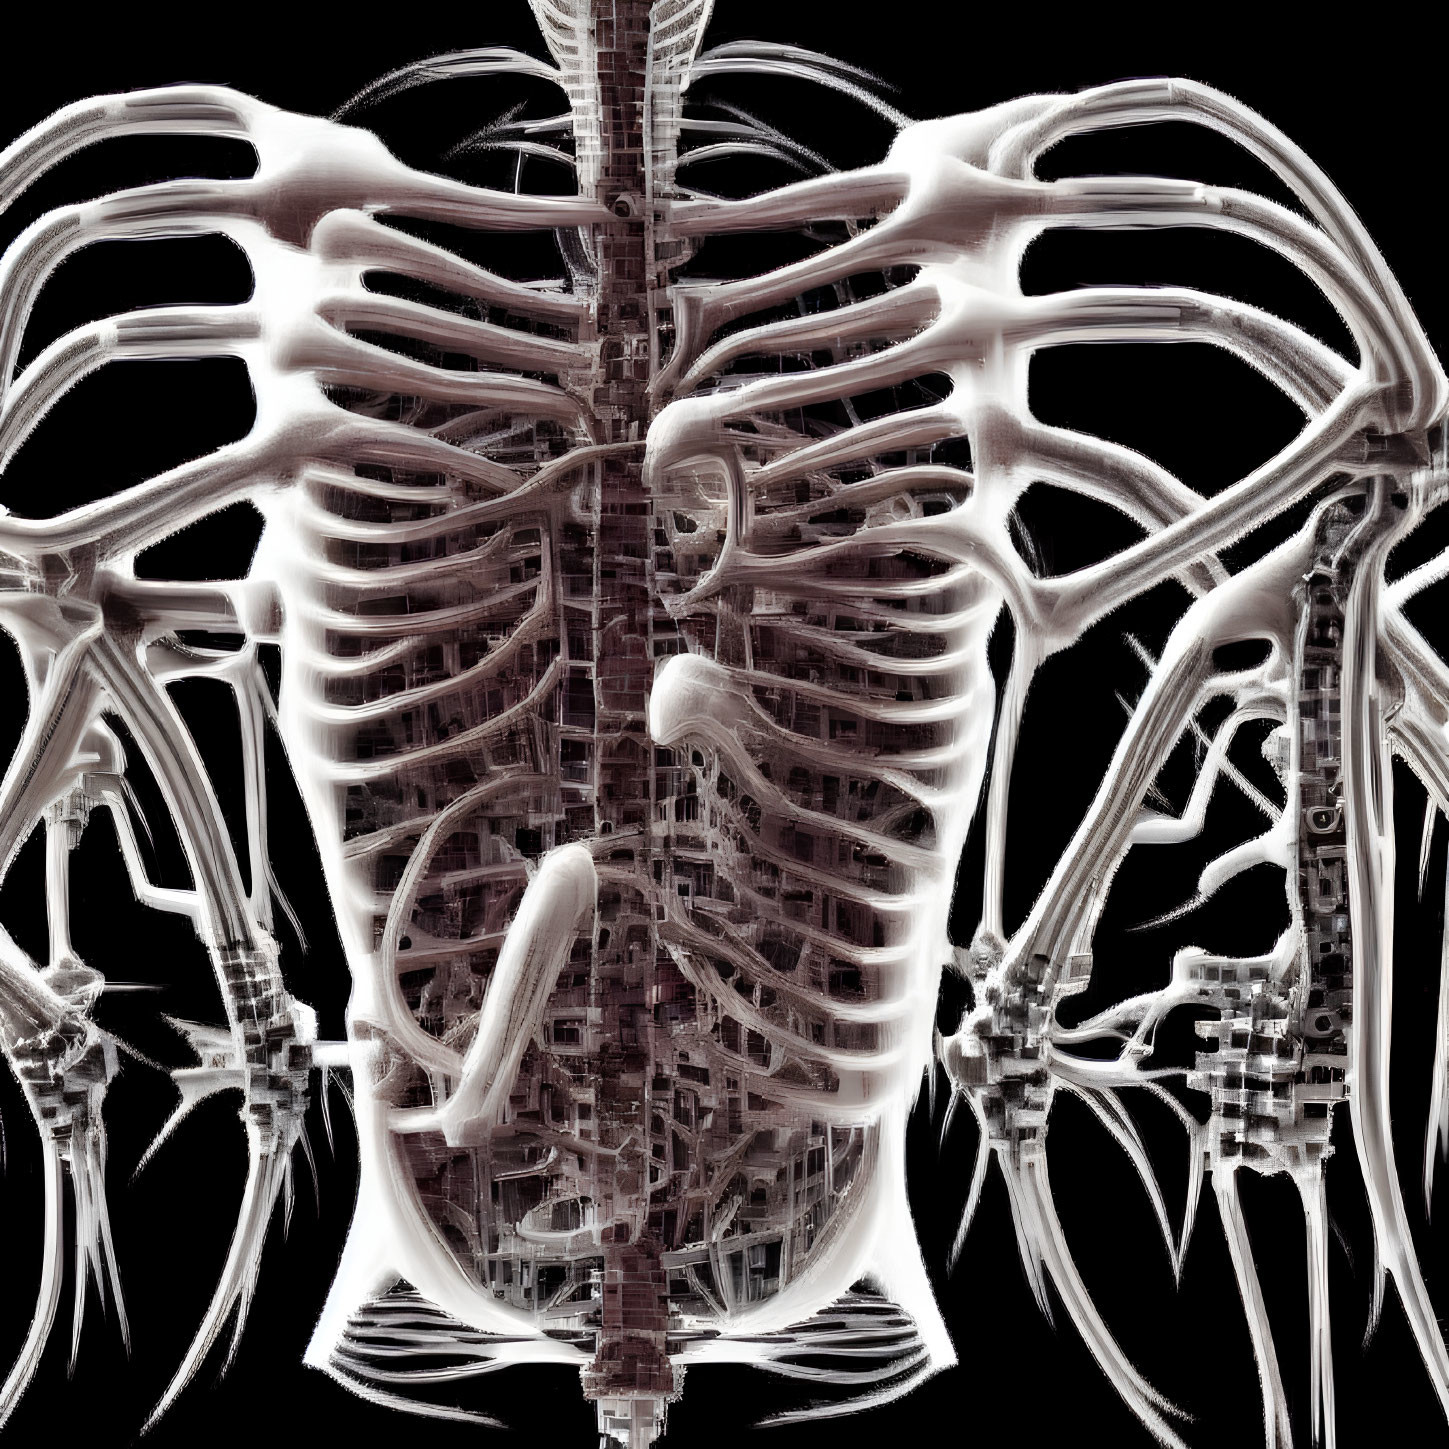 Detailed Digital Image of Human Skeleton's Ribcage and Upper Body Bones